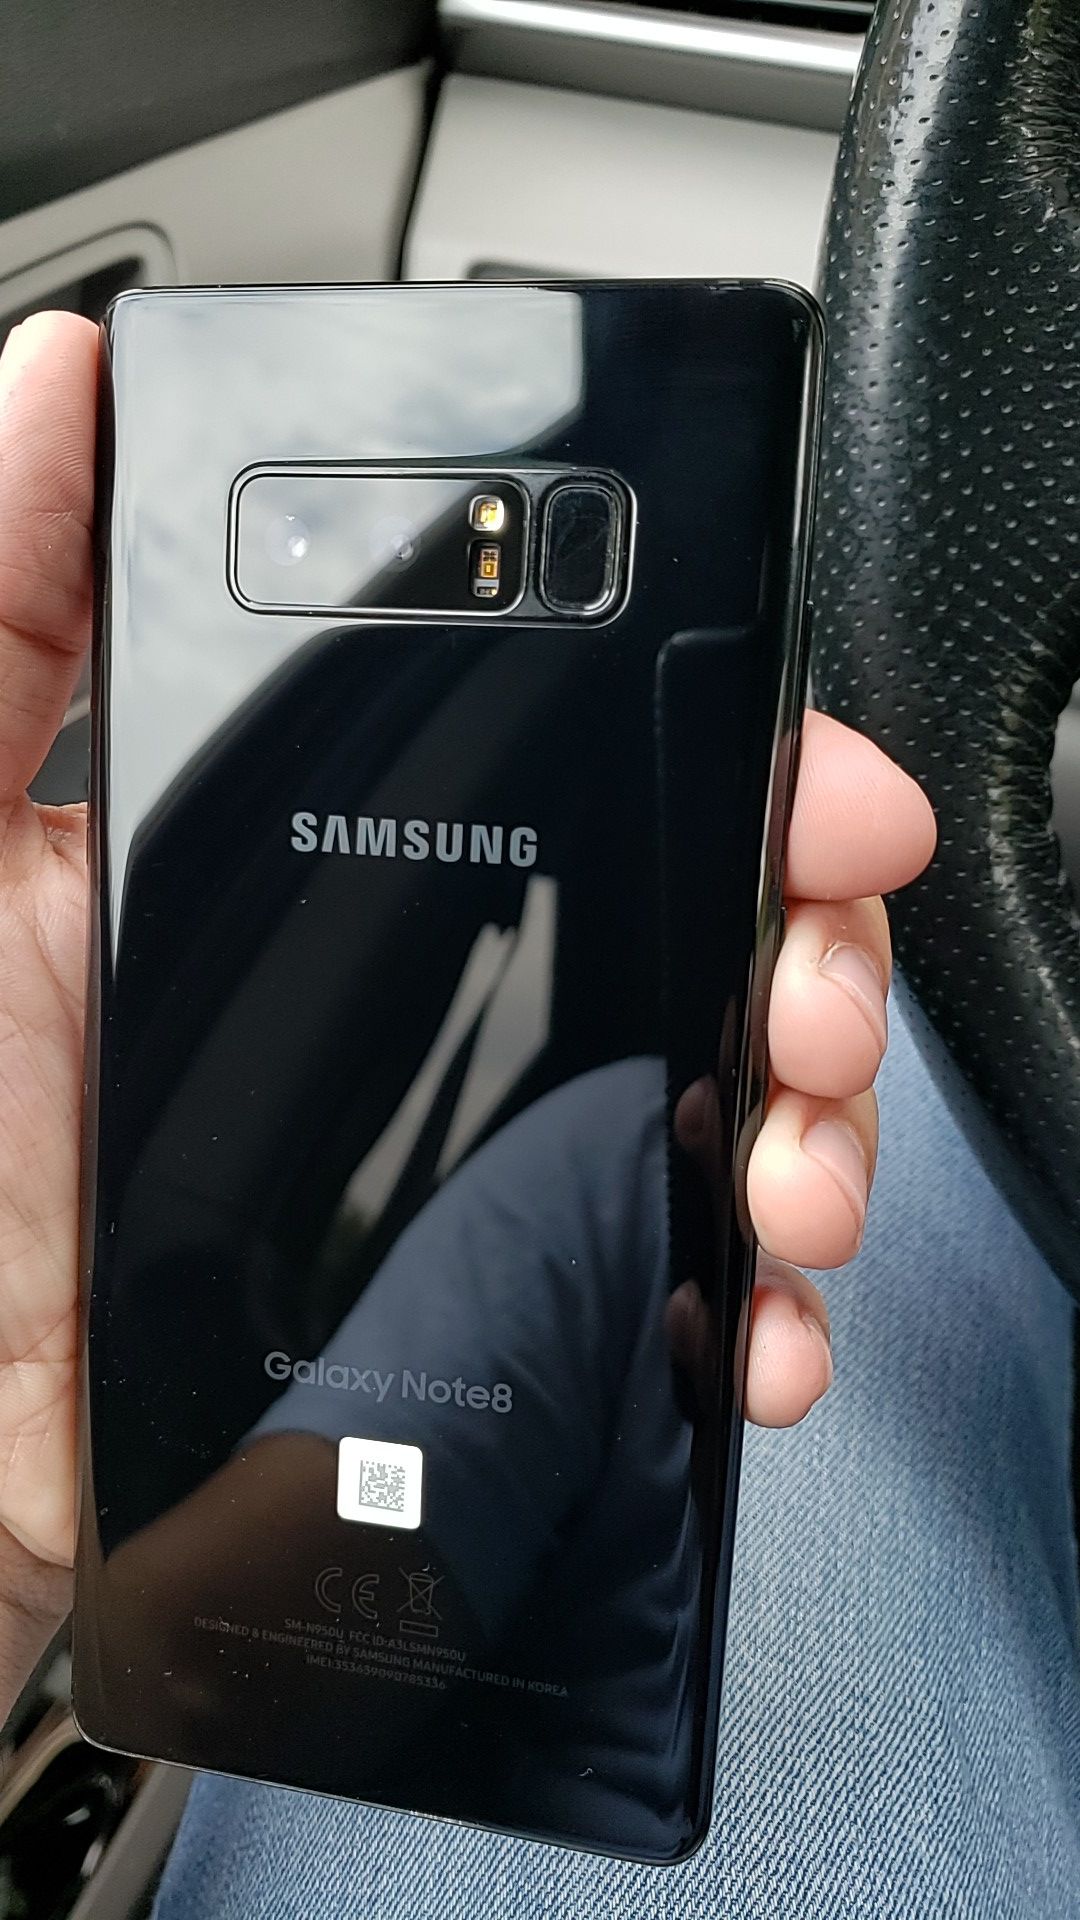 Samsung Galaxy Note 8 64 Gb from Verizon unlock